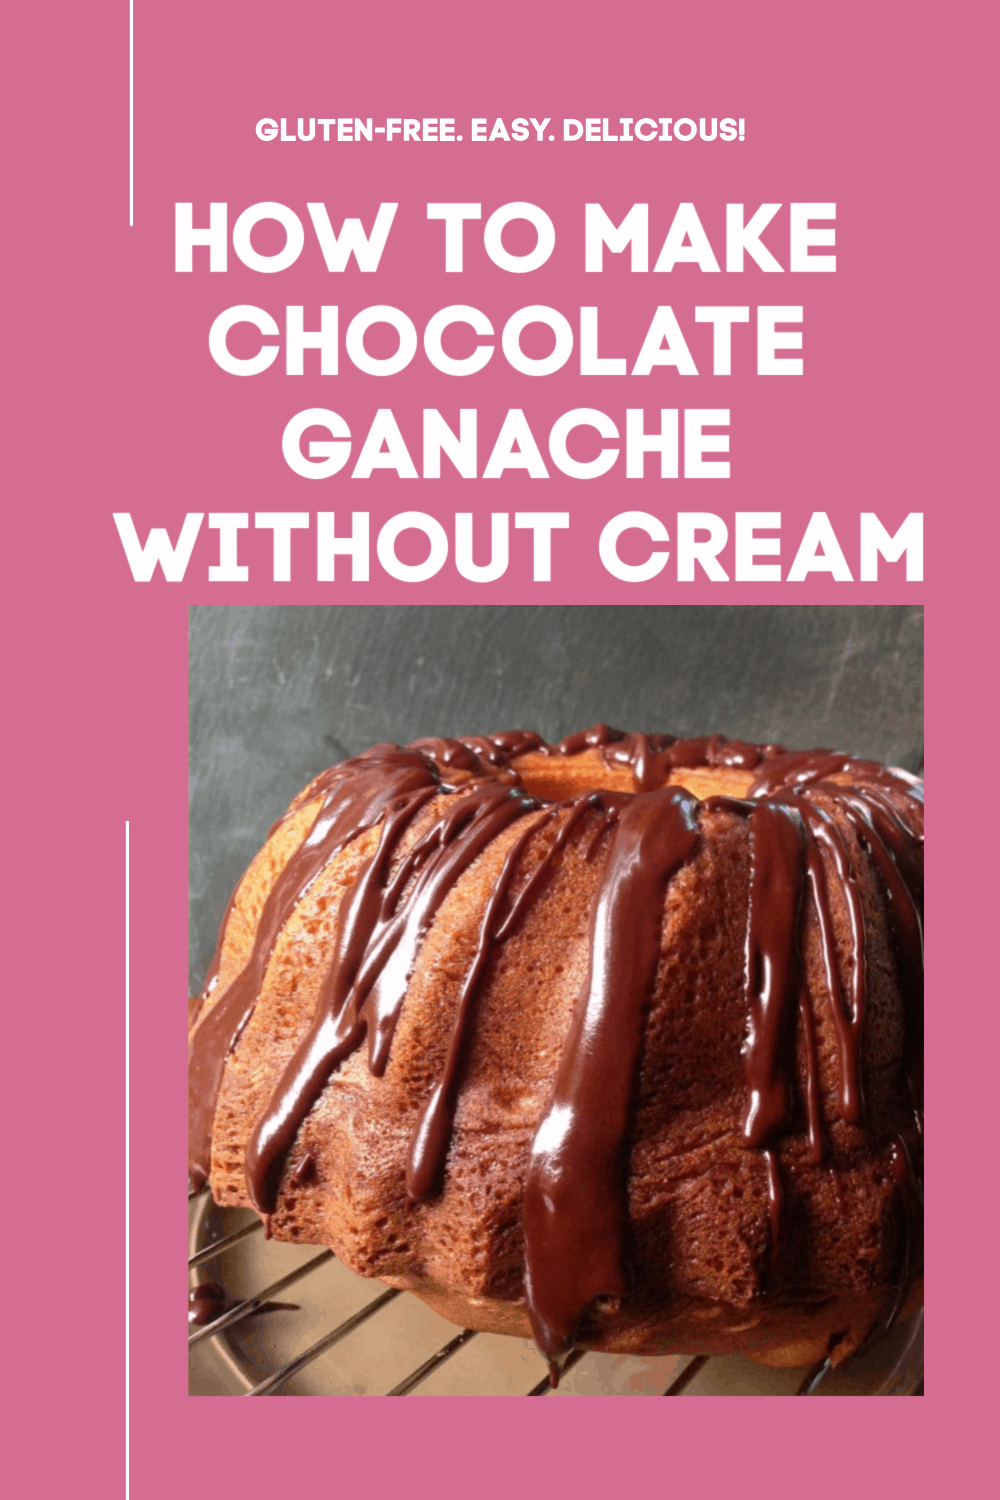 dark chocolate ganache without cream pretty cake